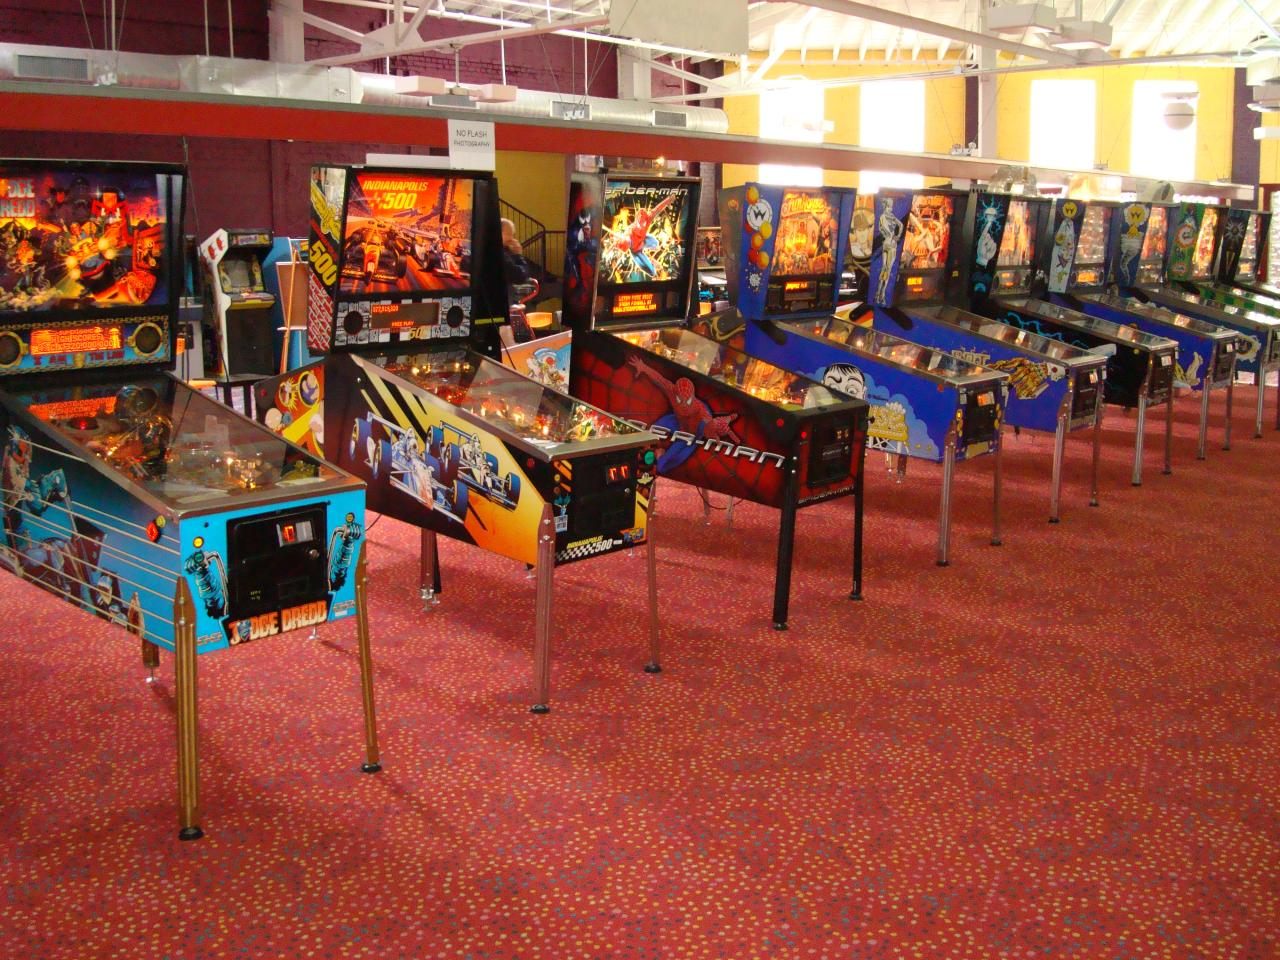 Where to Play Pinball & Arcade Games Near Me